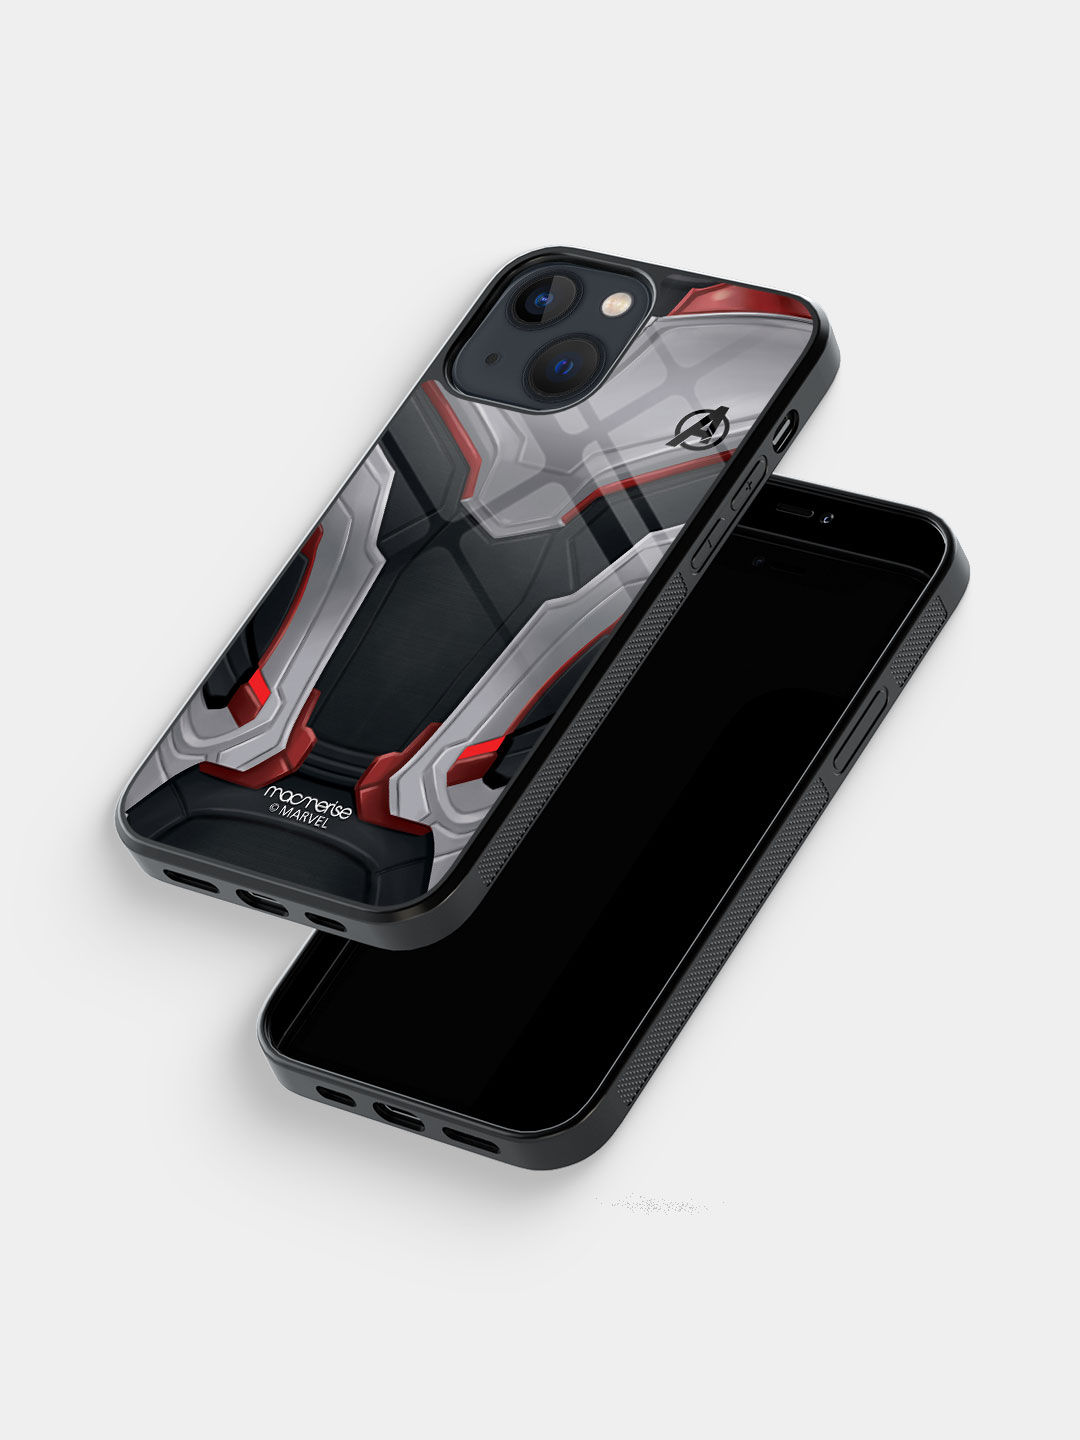 Avengers Endgame Suit - Glass Case For Iphone 13 Mini